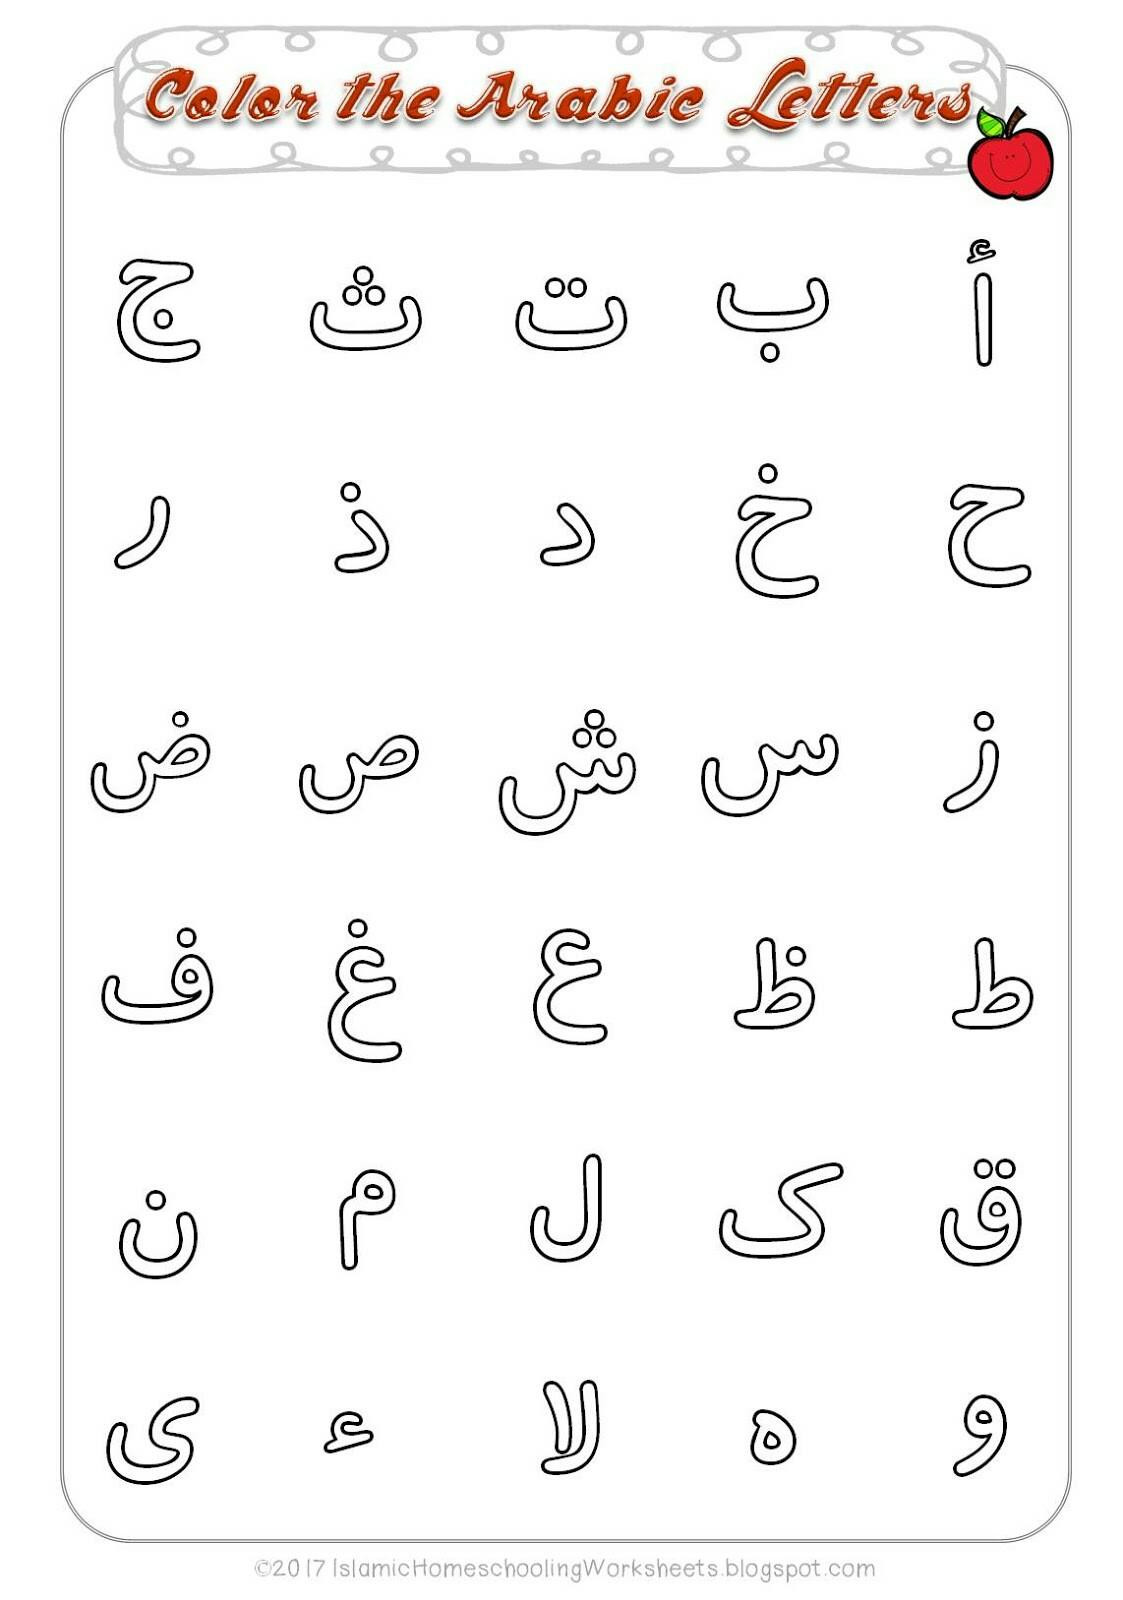 Arabic Alphabet Worksheets for Preschoolers Arabic Alphabet Worksheets for Preschoolers Pdf Clover